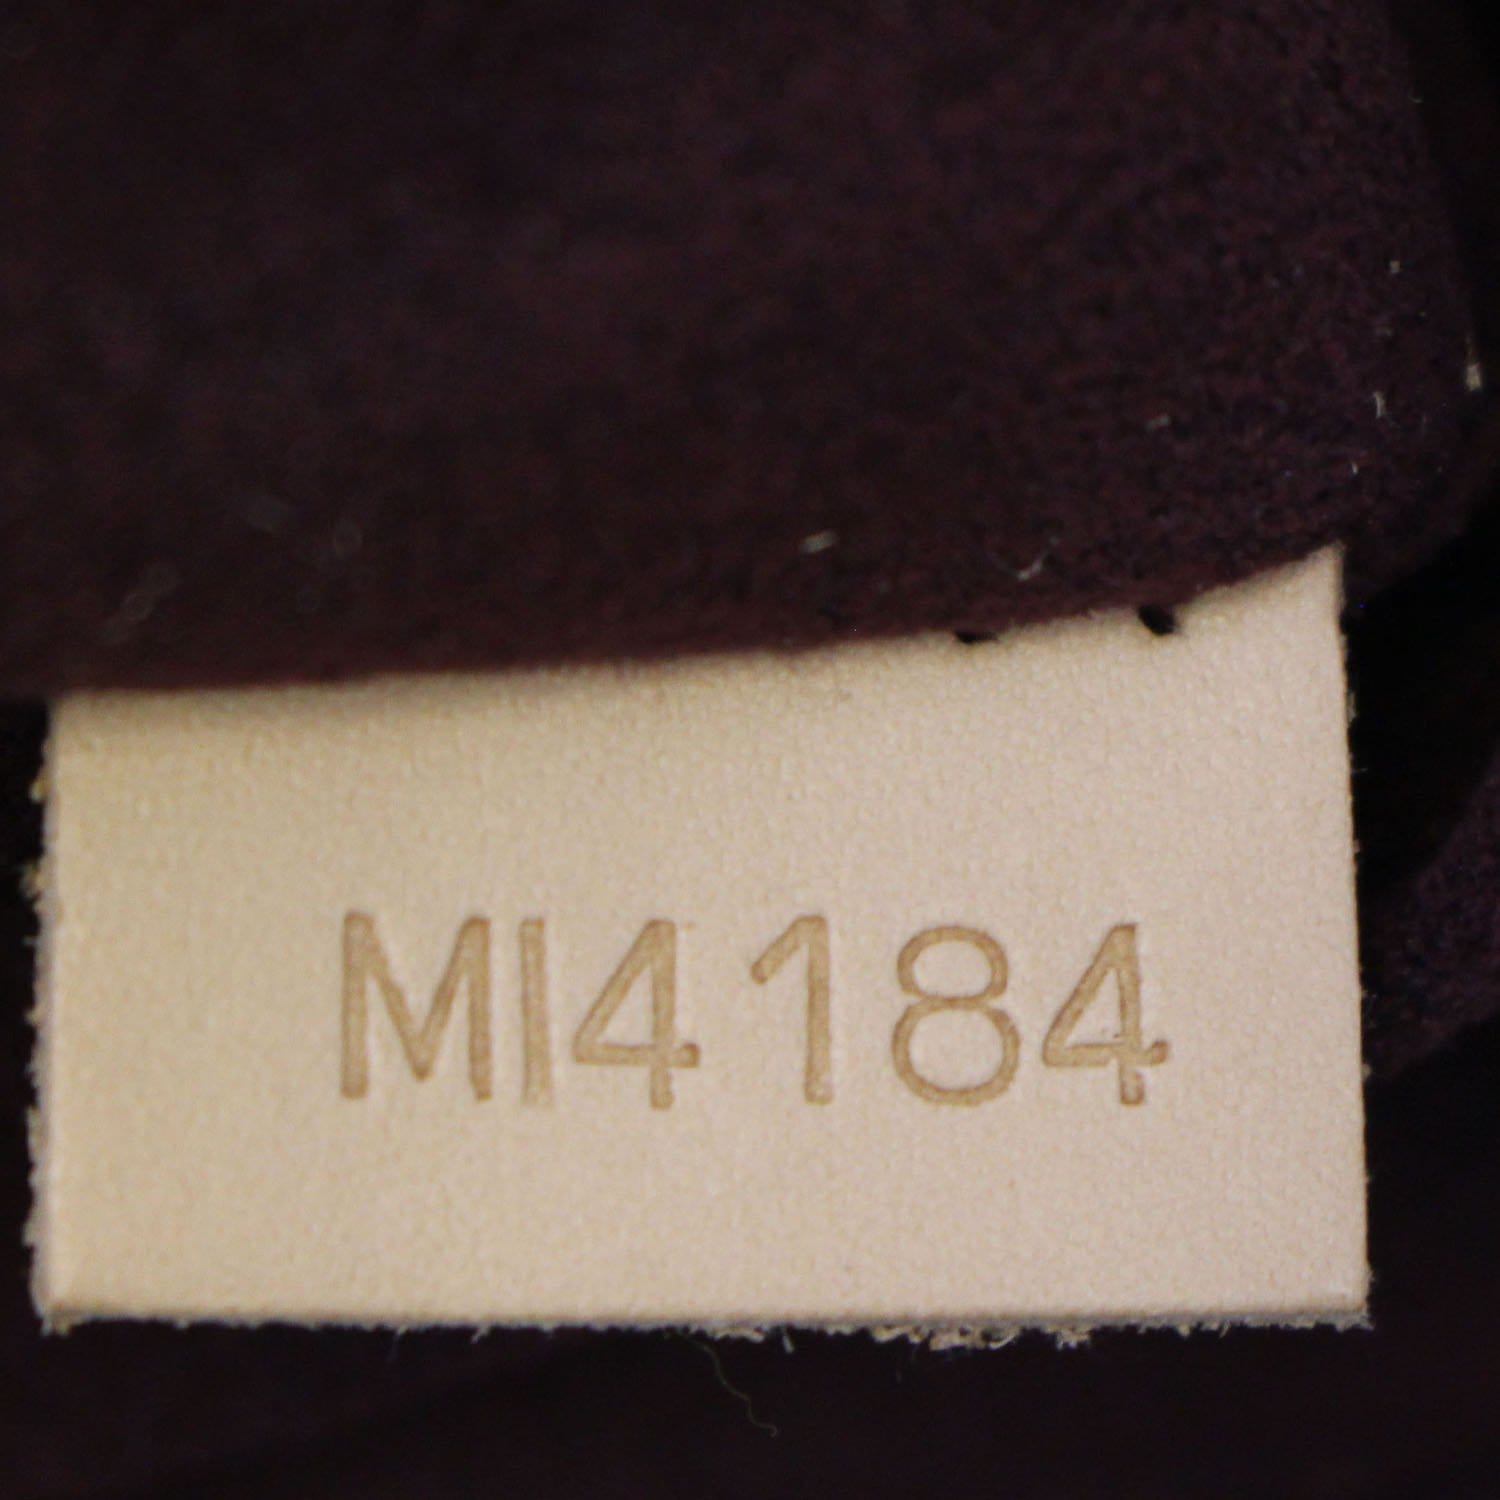 Louis Vuitton M51195 Estrela NM Red & Brown Monogram Canvas Tote Bag